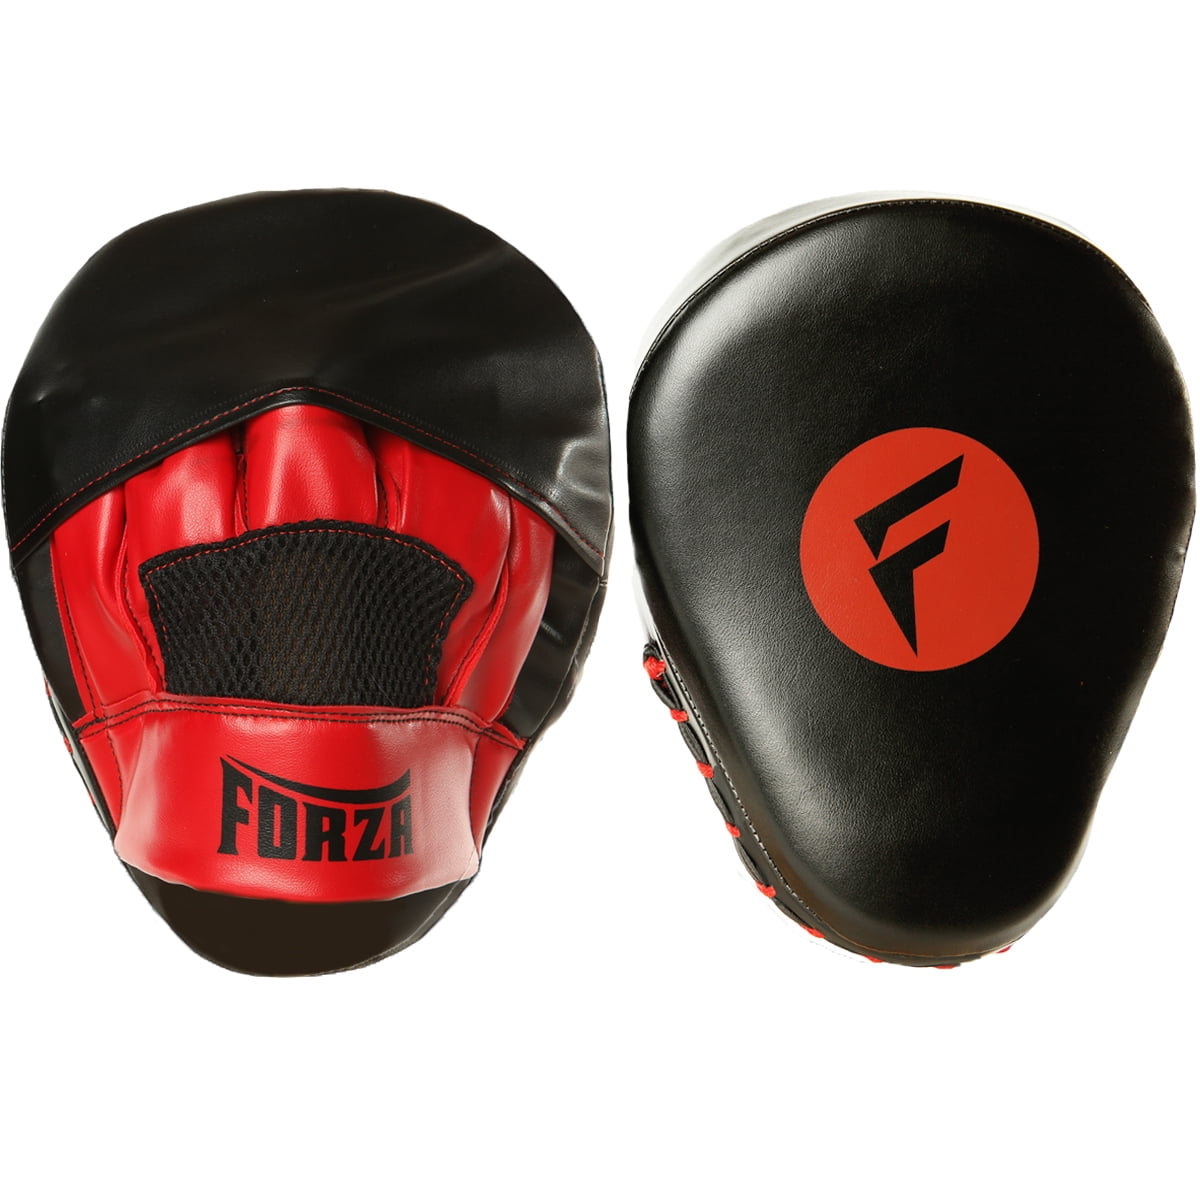 Boxing mitt training target punch pad glove focus karate combat thai kic JB 